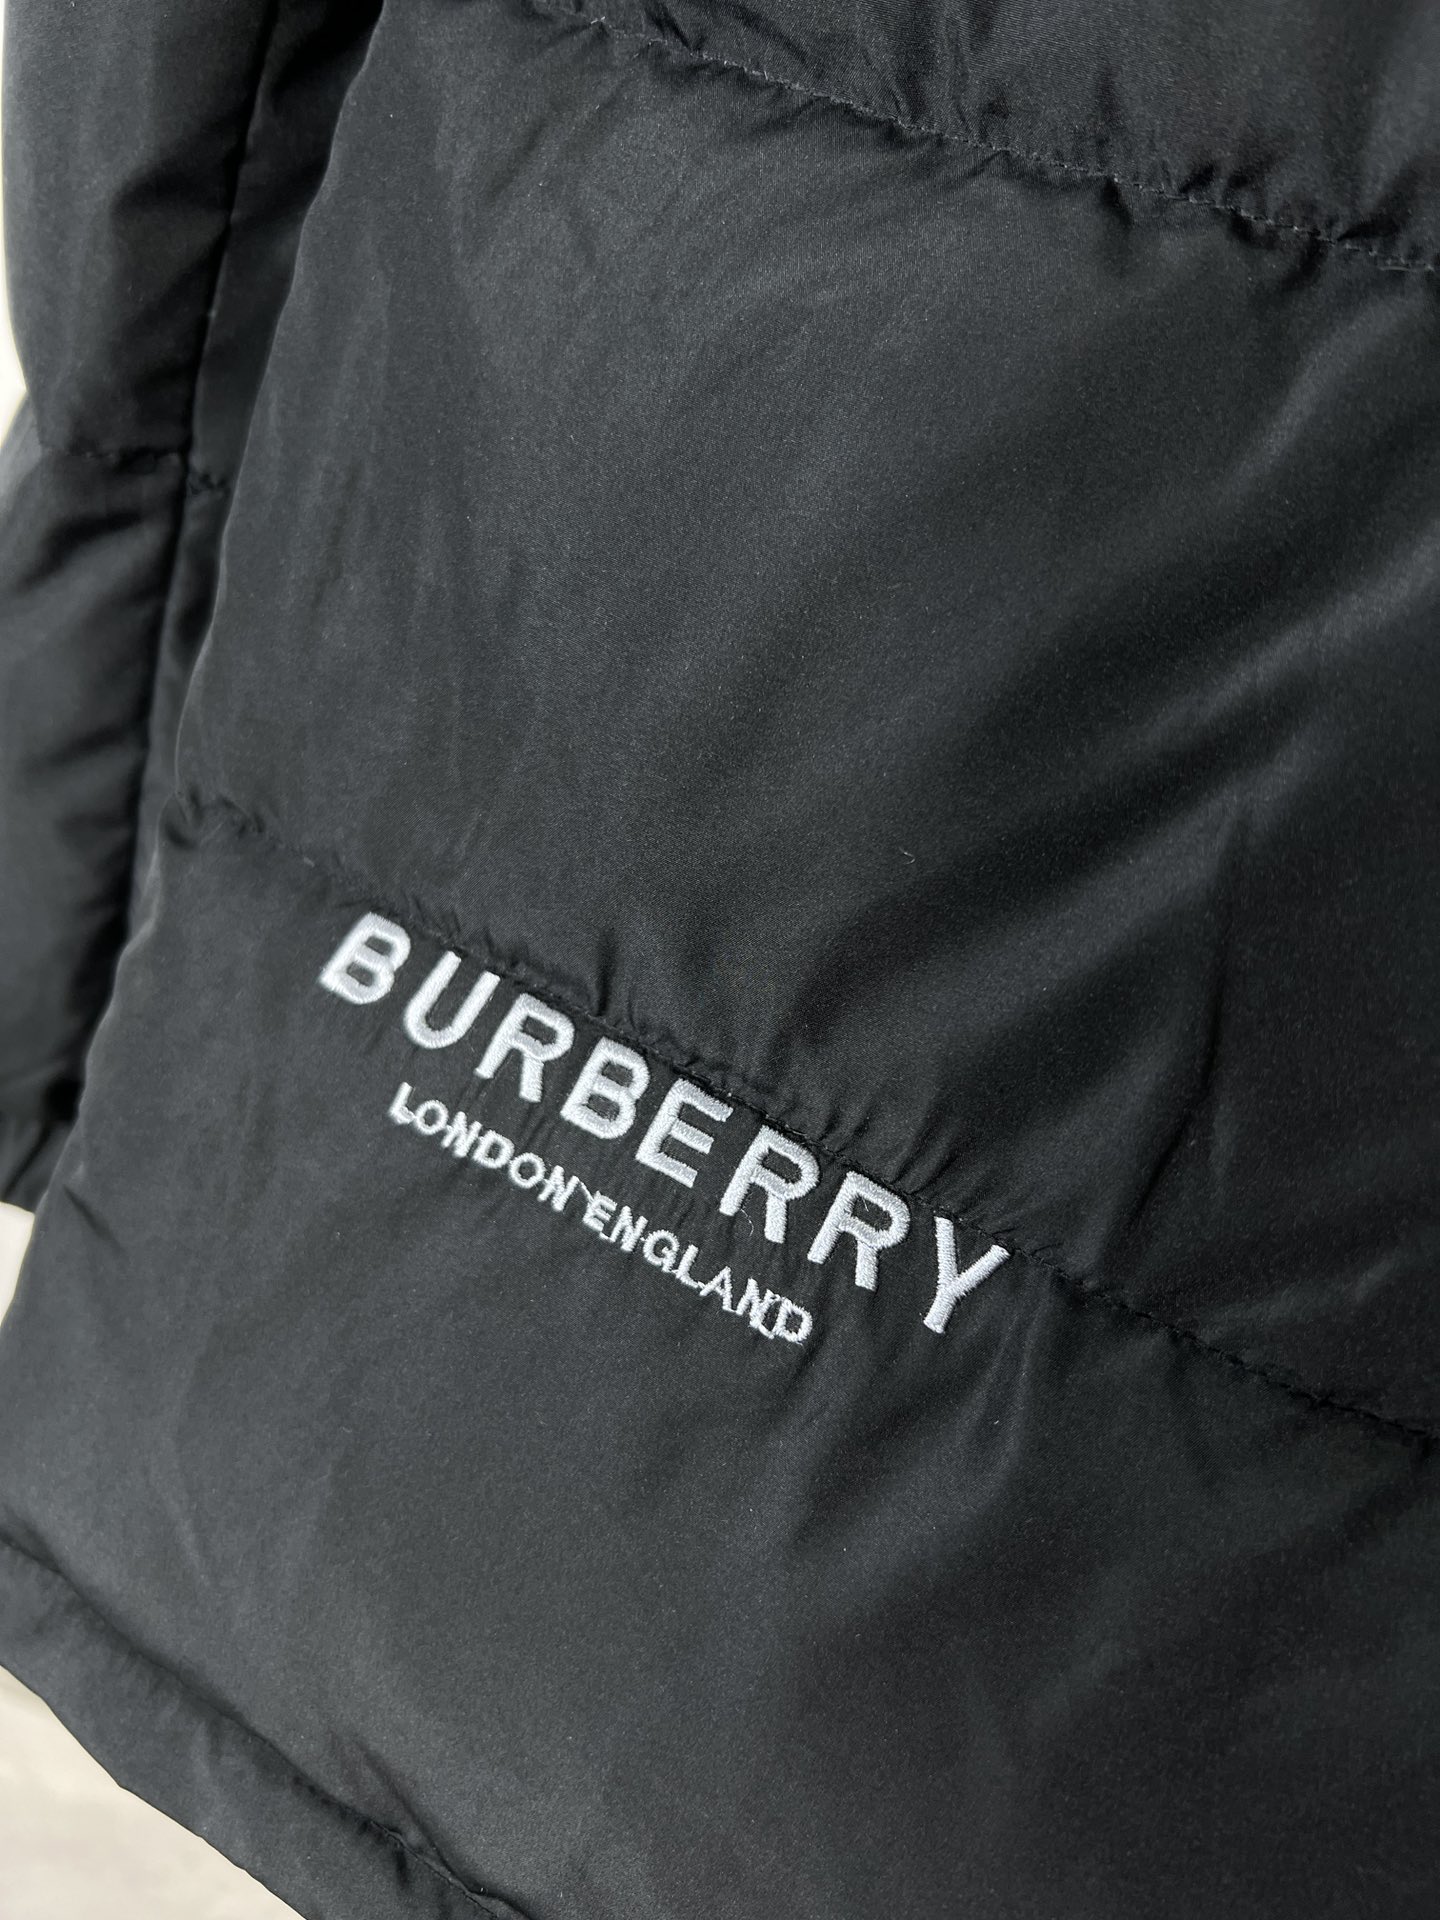 Burberry巴宝莉秋冬新款羽绒服原版1:1订制五金配件全进口原版定制欢迎专柜对比绝对的高品质采用顶级